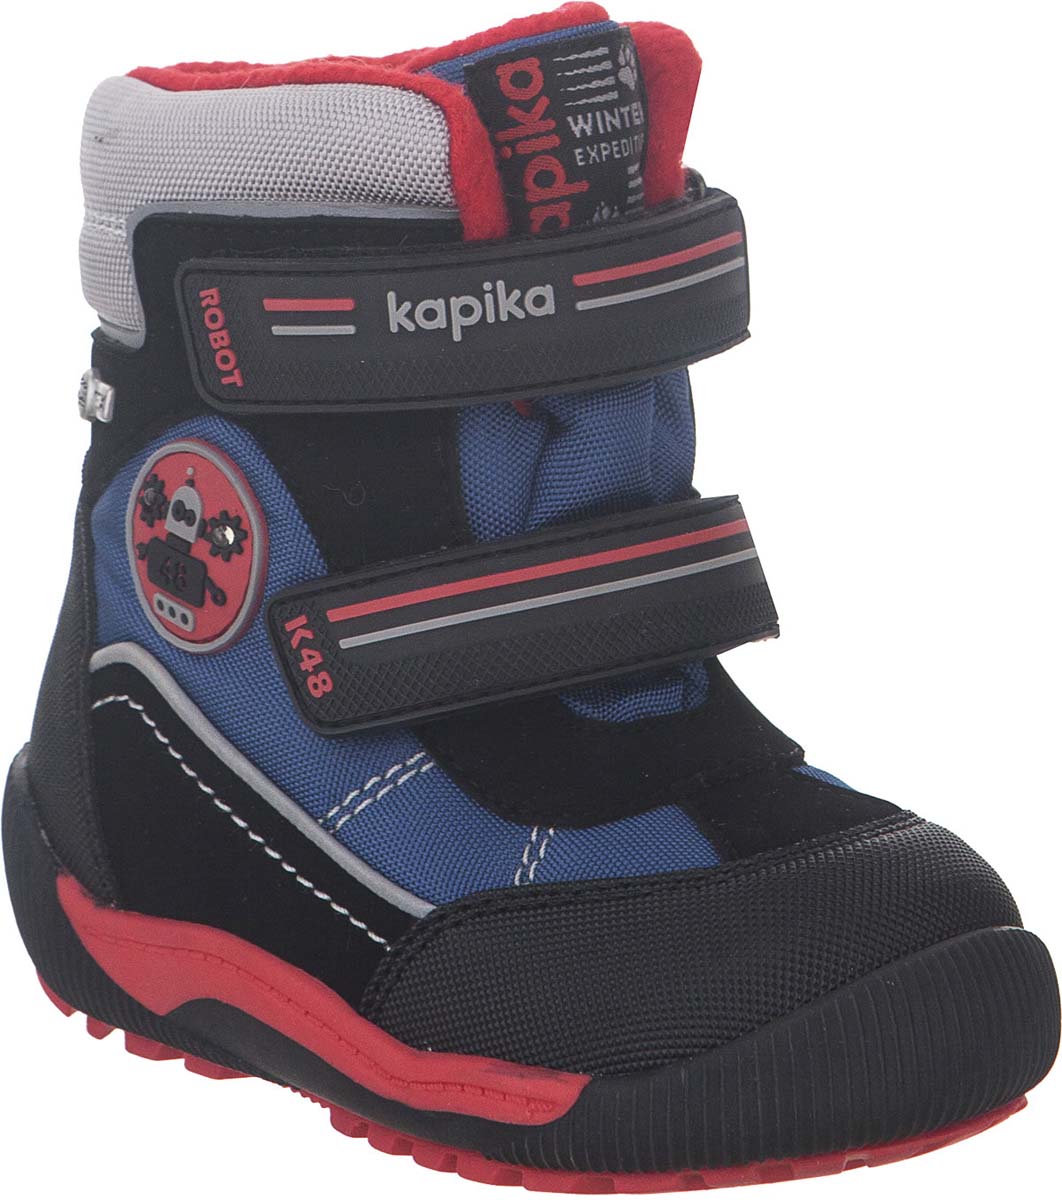 Ботинки для мальчика Kapika KapiTEX, цвет: синий, черный. 41206-1. Размер 22